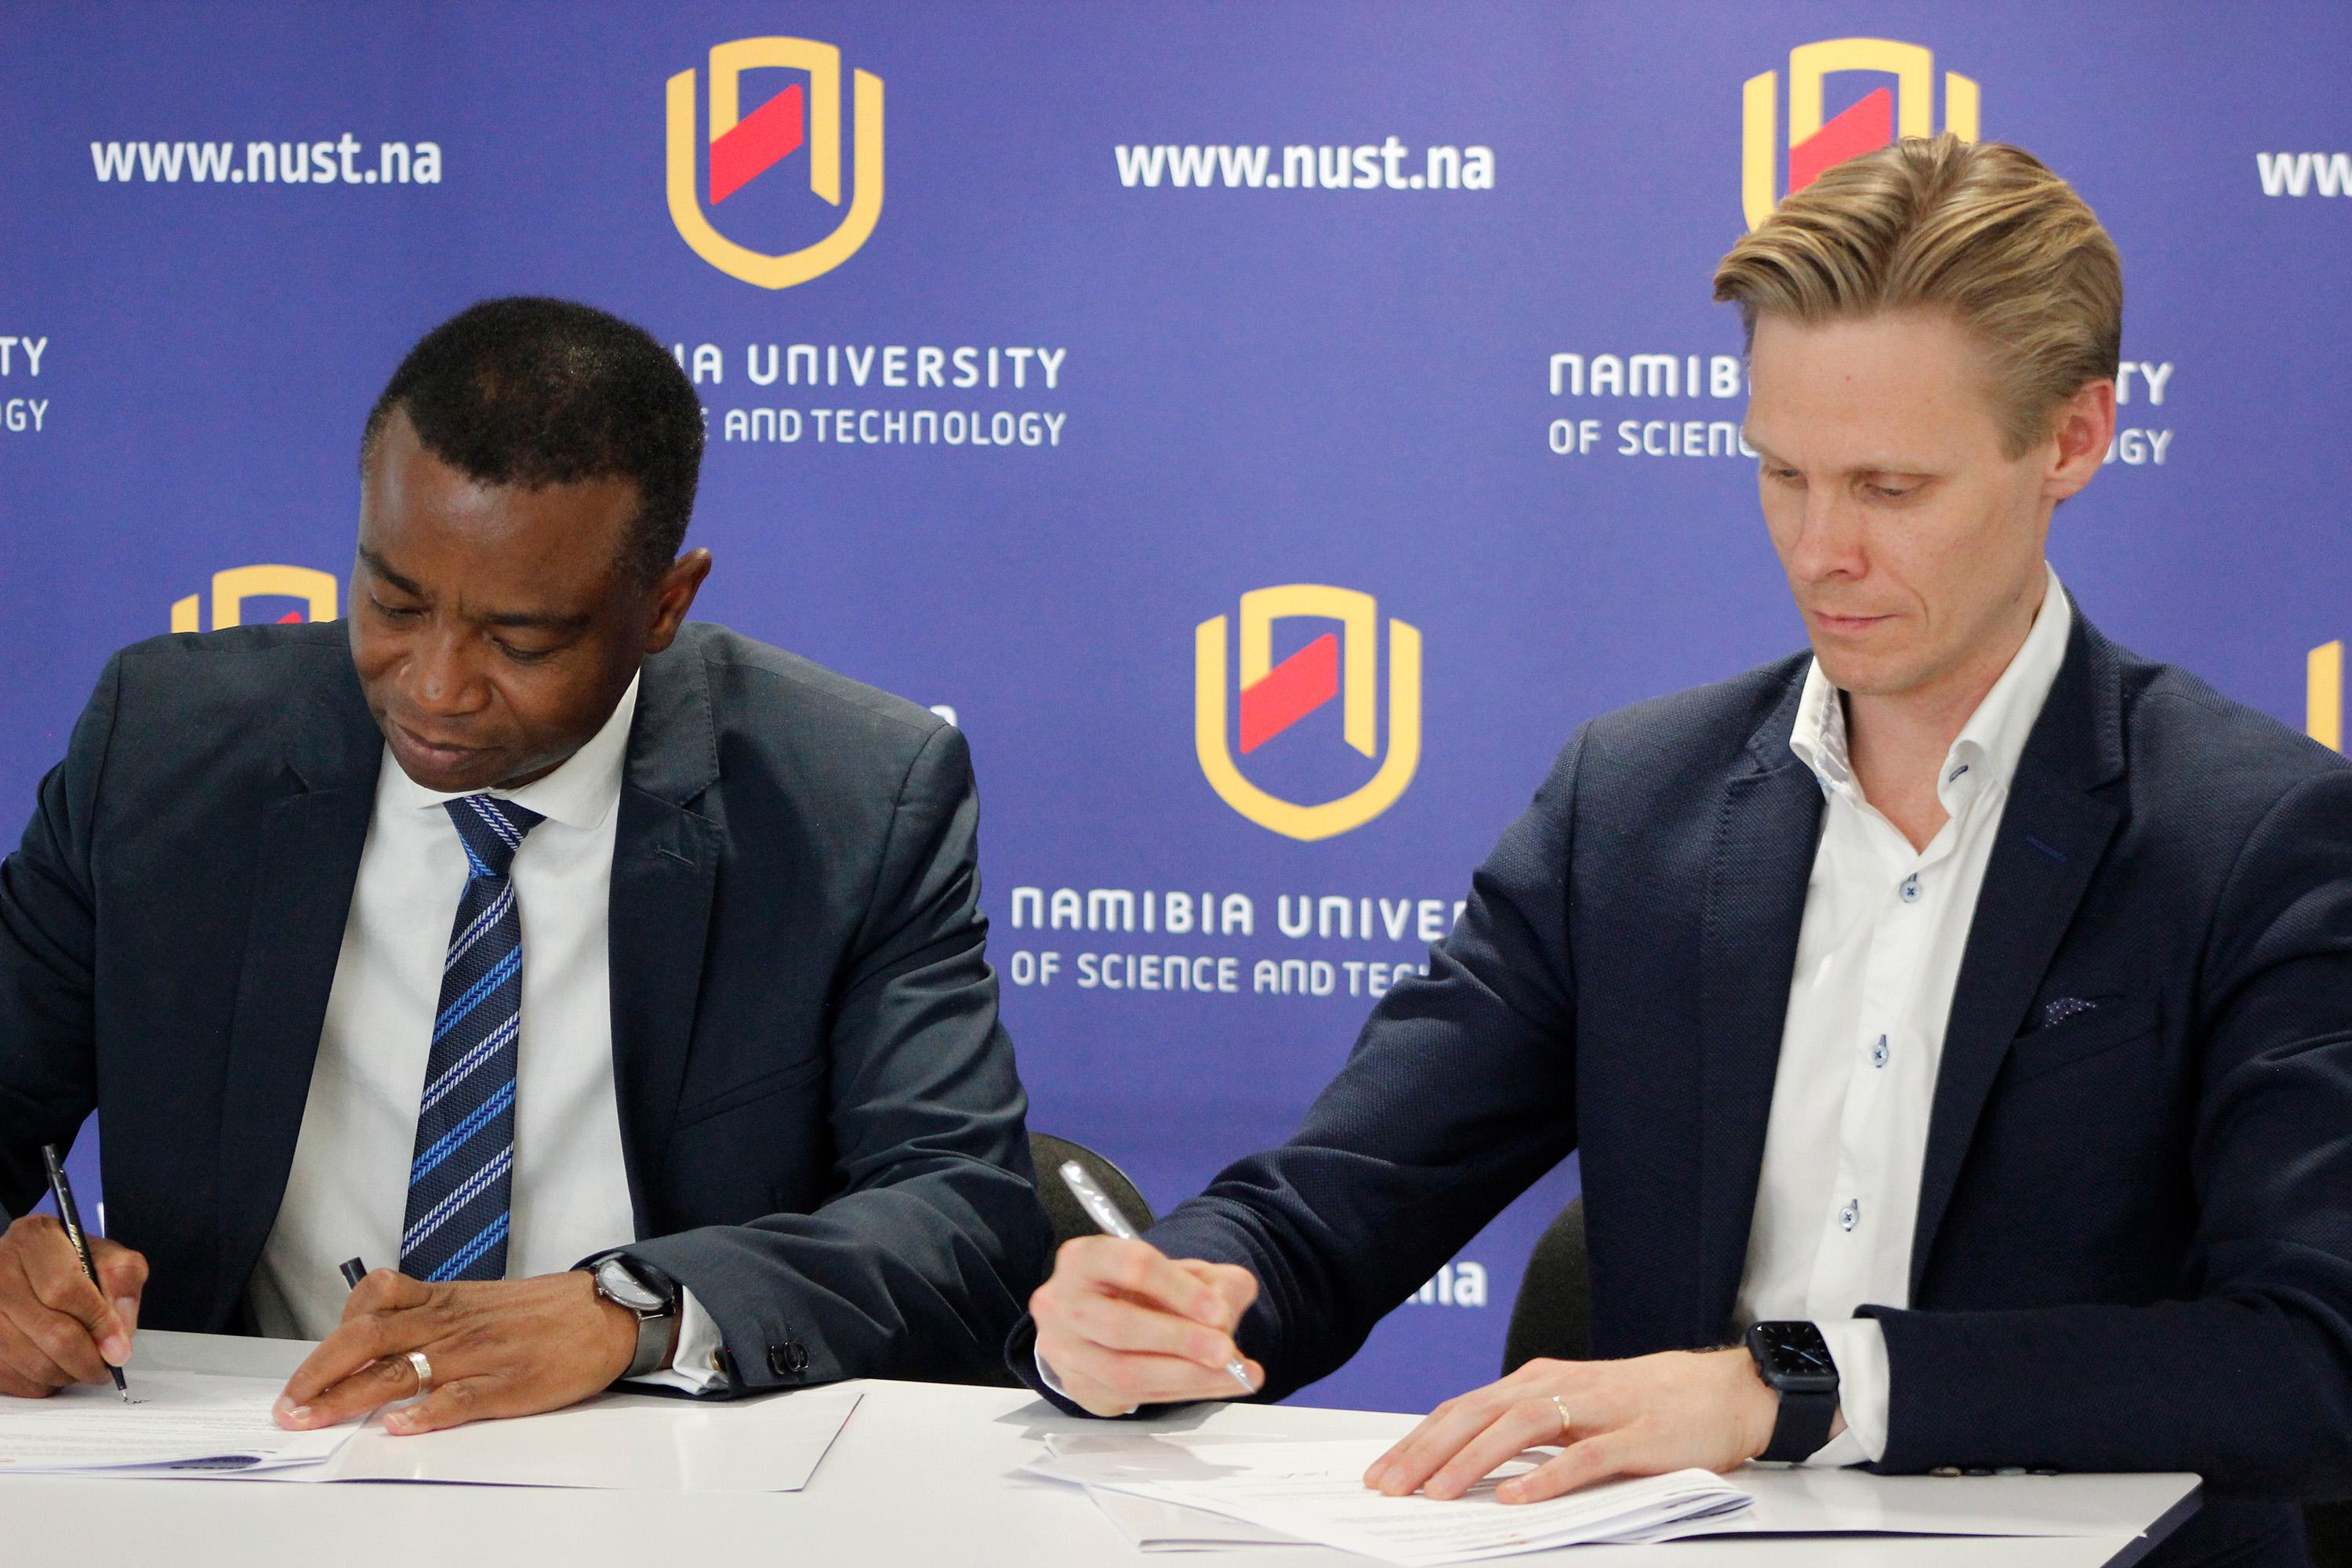 Demola and Namibia University of Science and Technology establish Demola Hub in Namibia